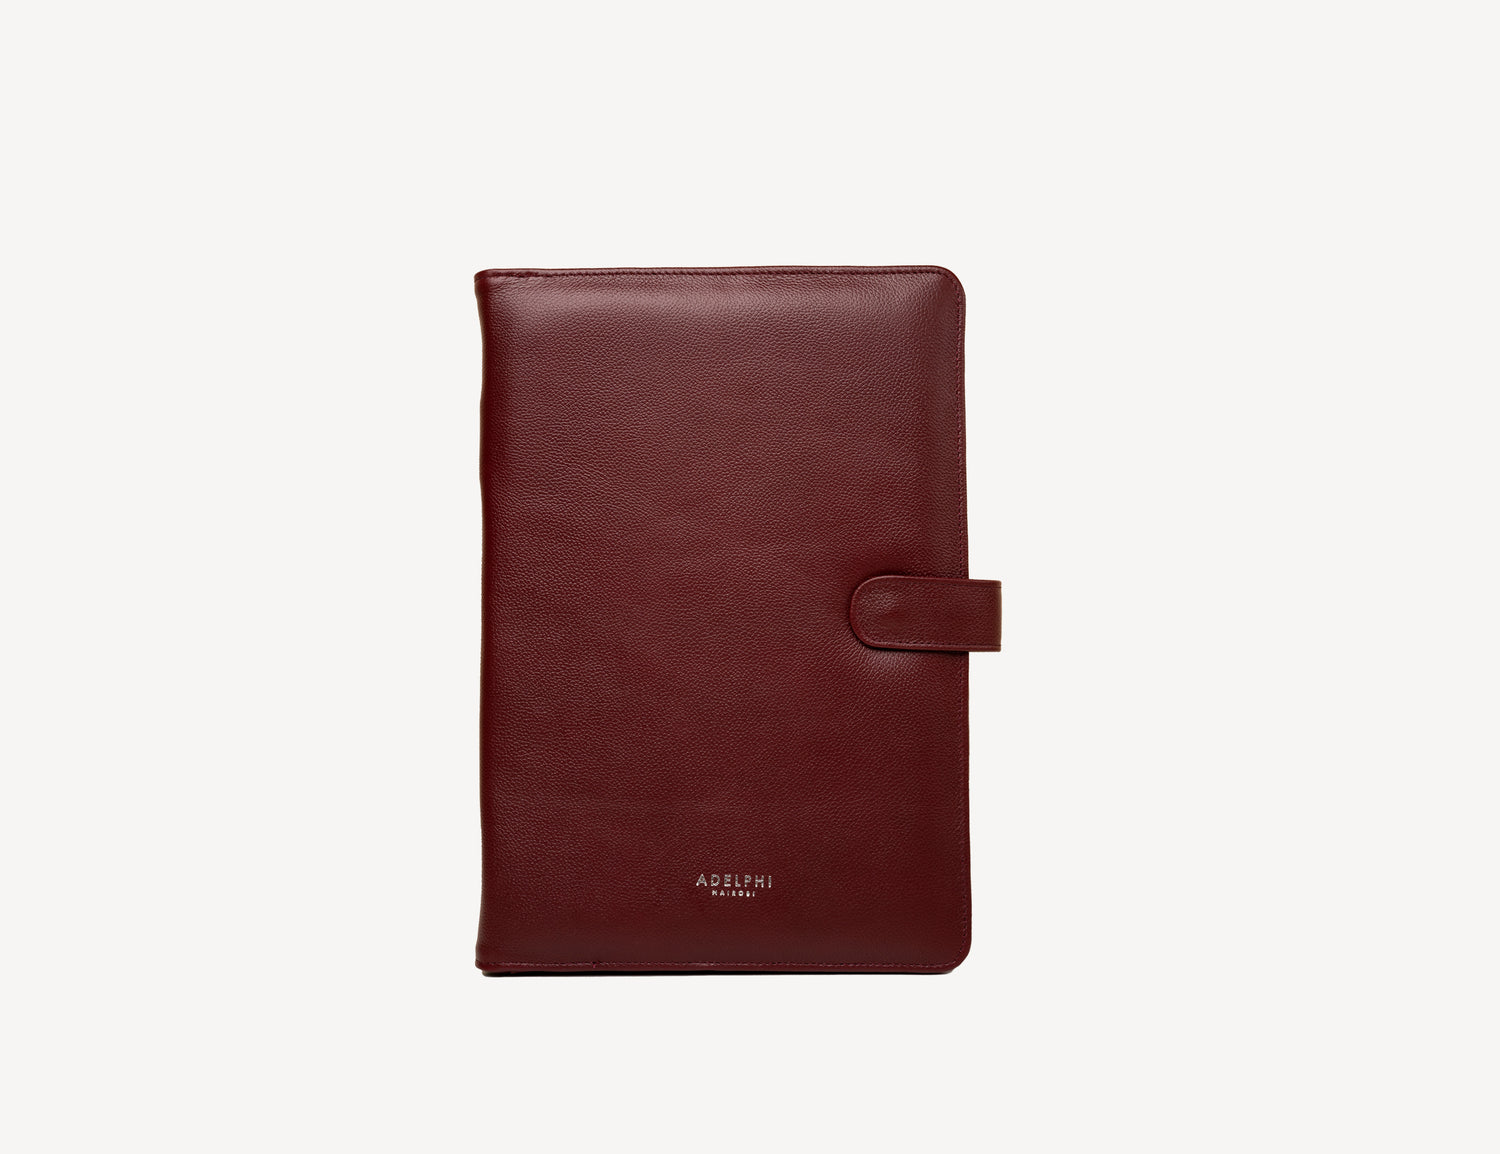 CBA II | Office Leather Folder | Adelphi Kenya